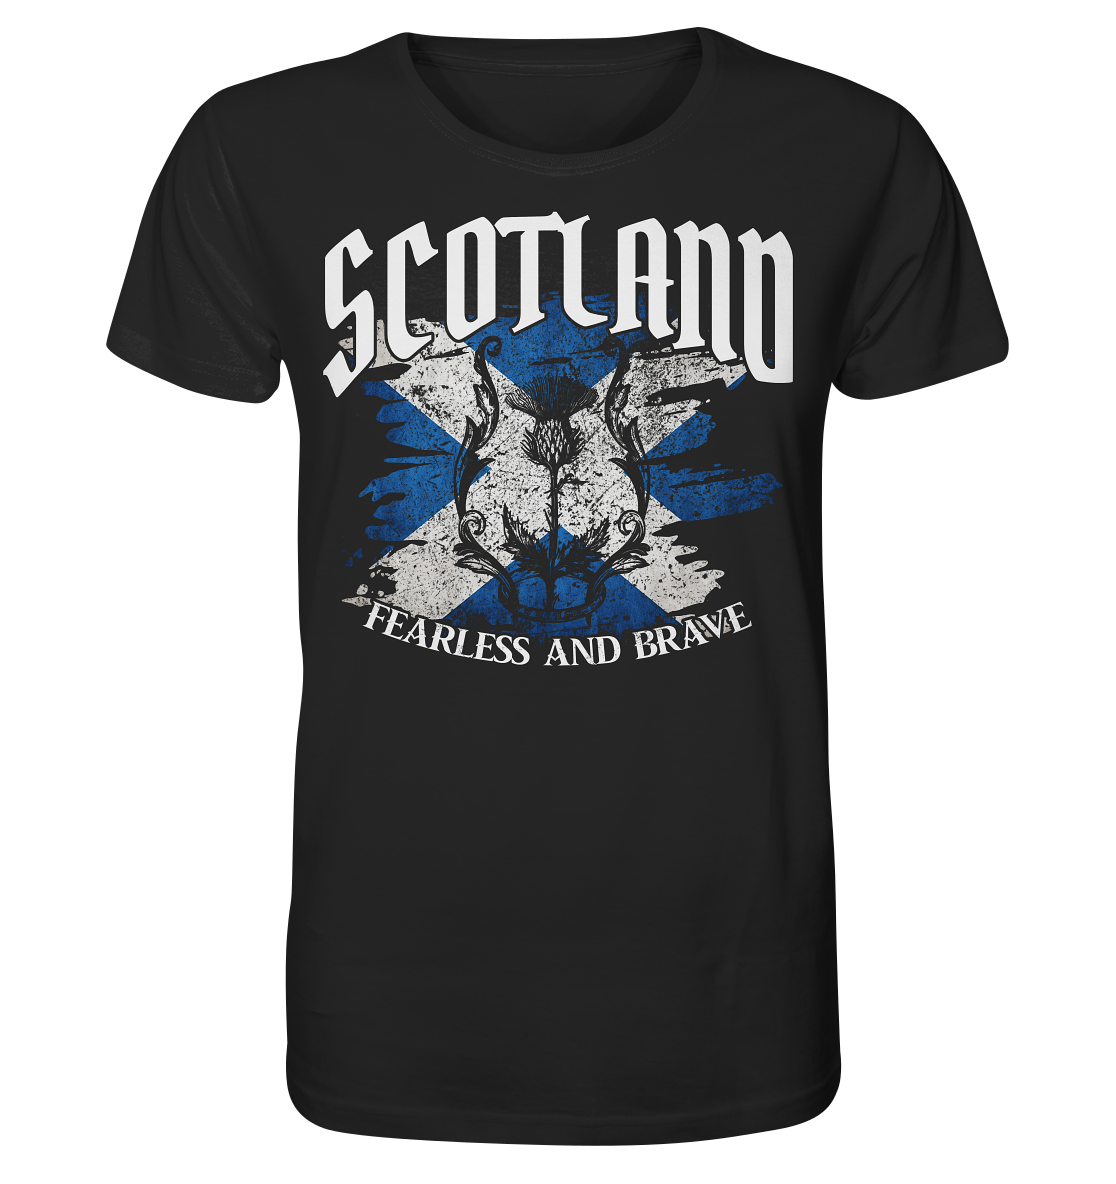 Scotland "Fearless and Brave / Splatter" - Organic Shirt